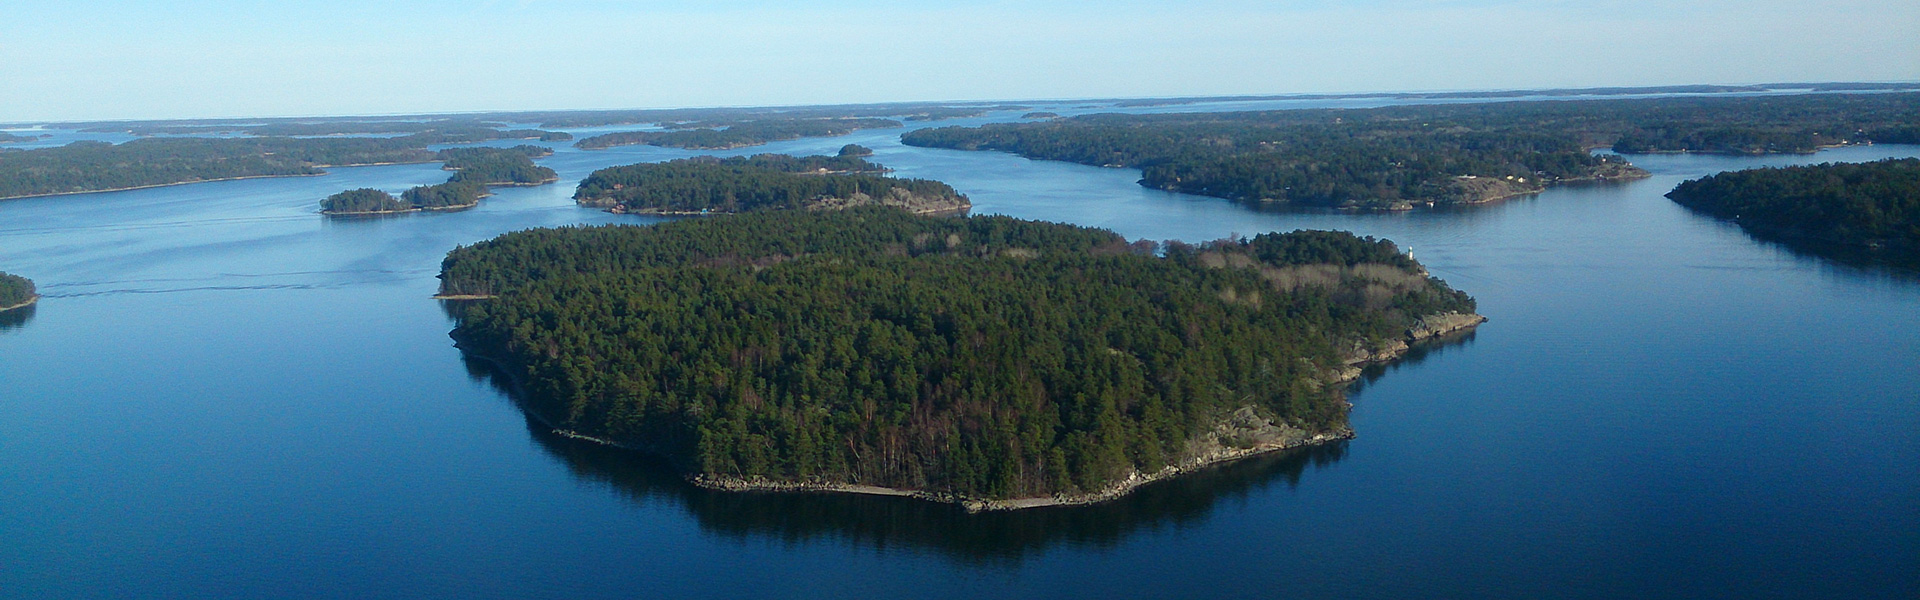 Private Islands For Sale Kalvon Sweden Europe Atlantic